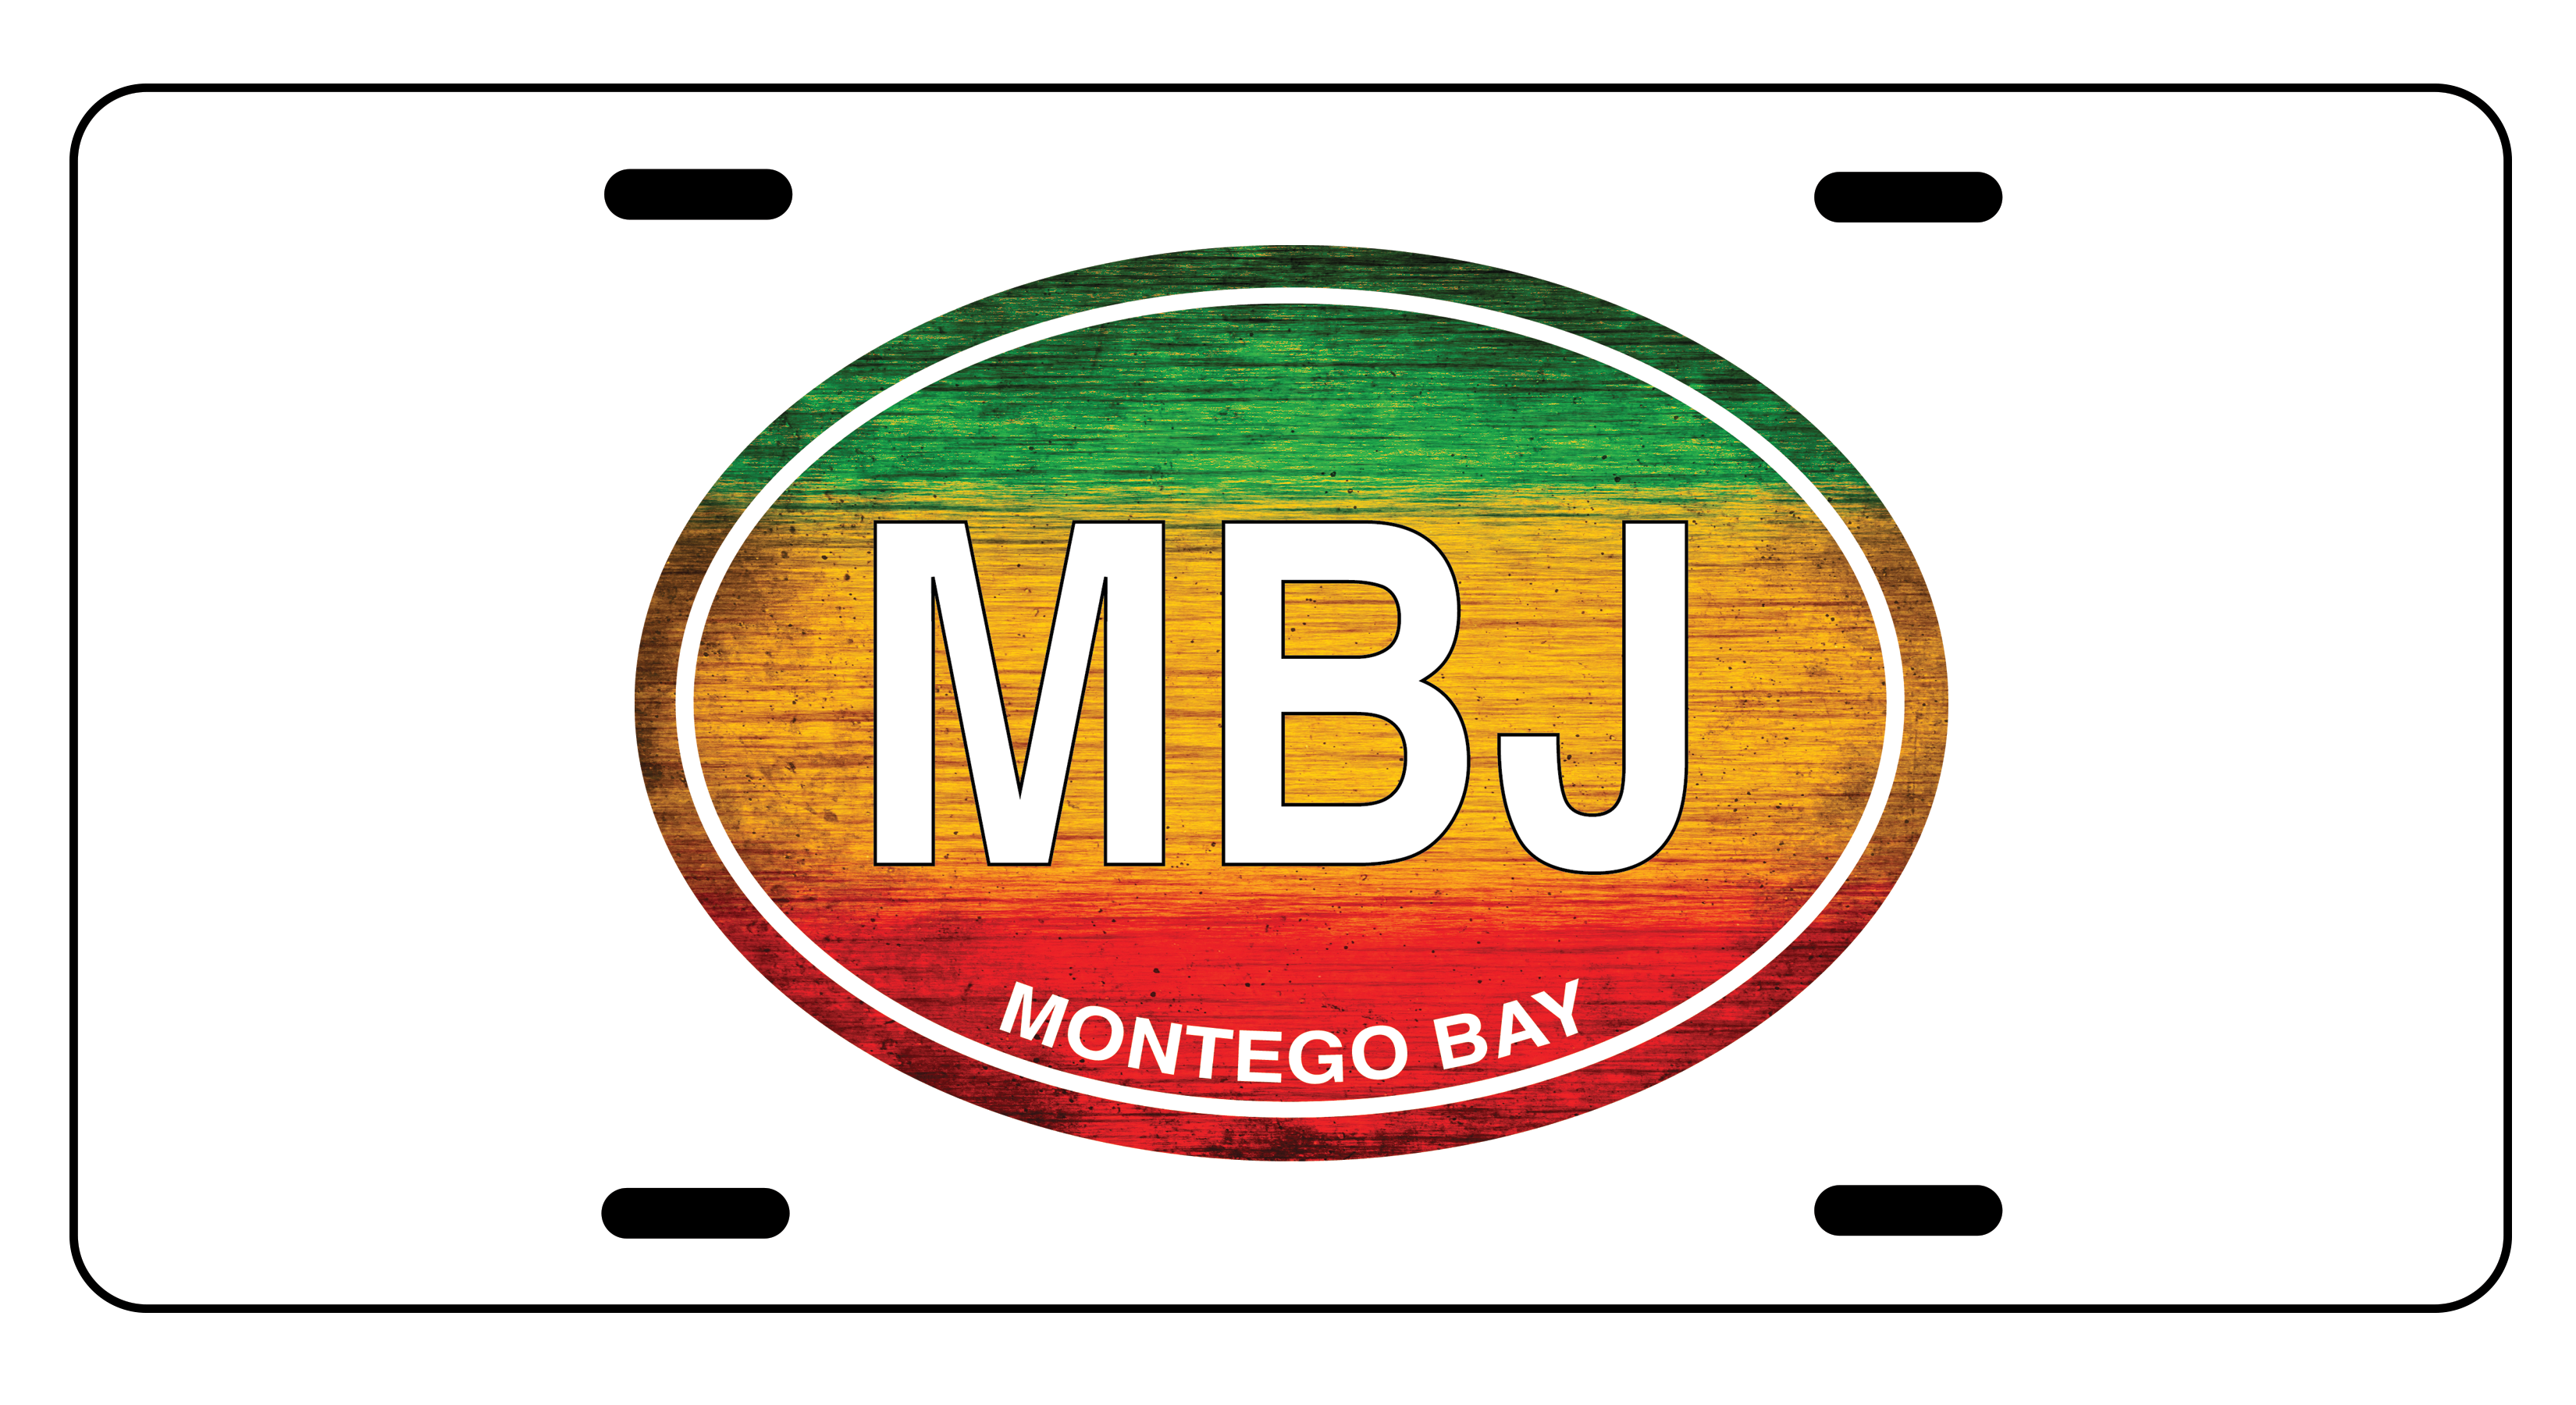 Montego Bay Rasta Logo License Plates - My Destination Location